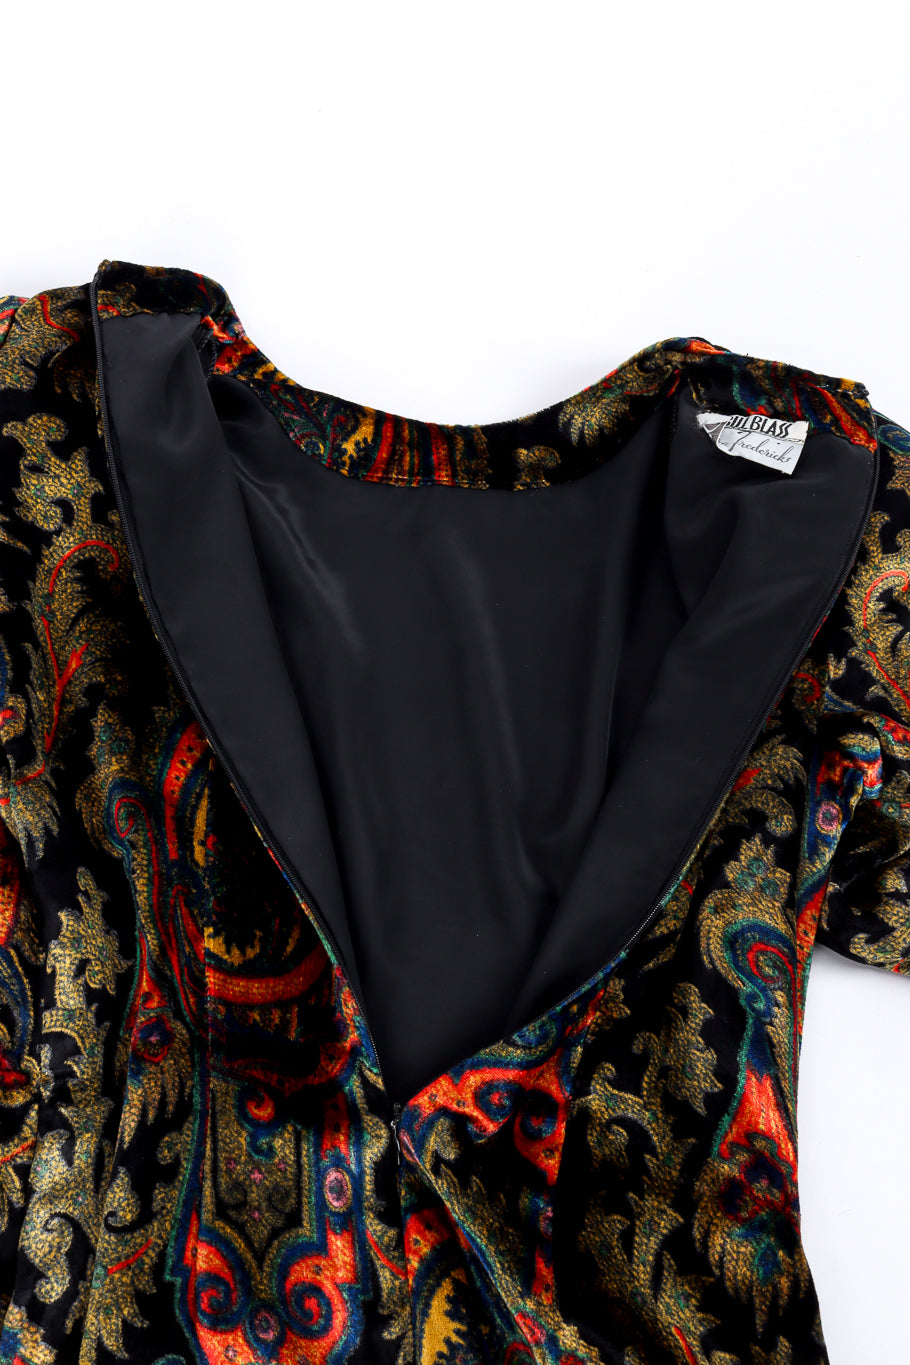 Vintage Bill Blass Paisley Silk Velvet Shawl Dress back unzipped @recessla